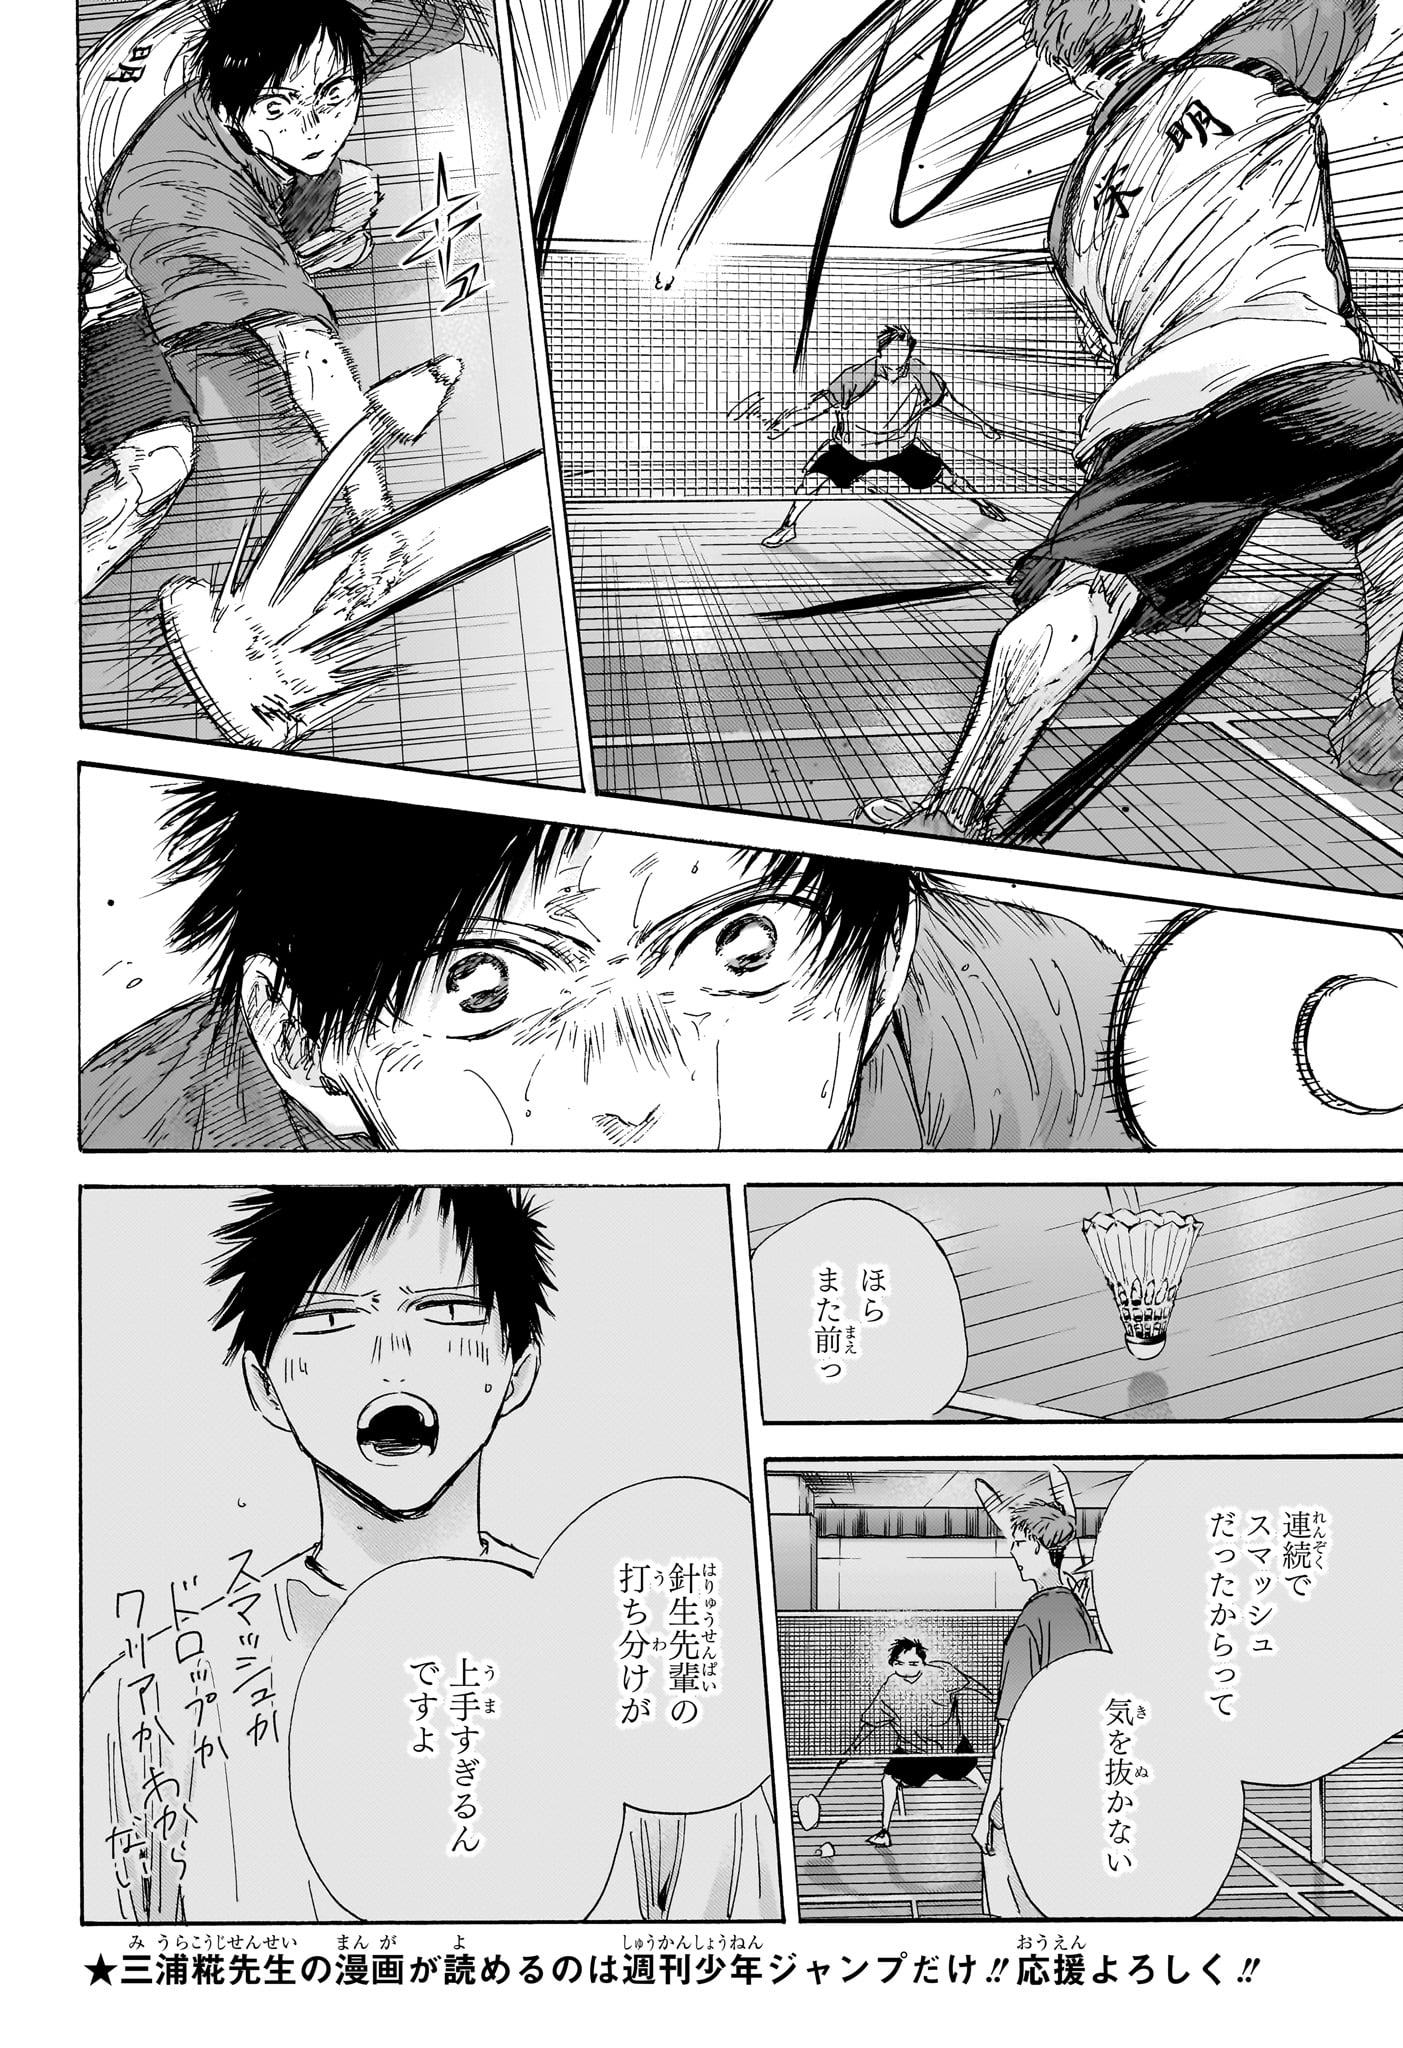 Ao no Hako - Chapter 142 - Page 4